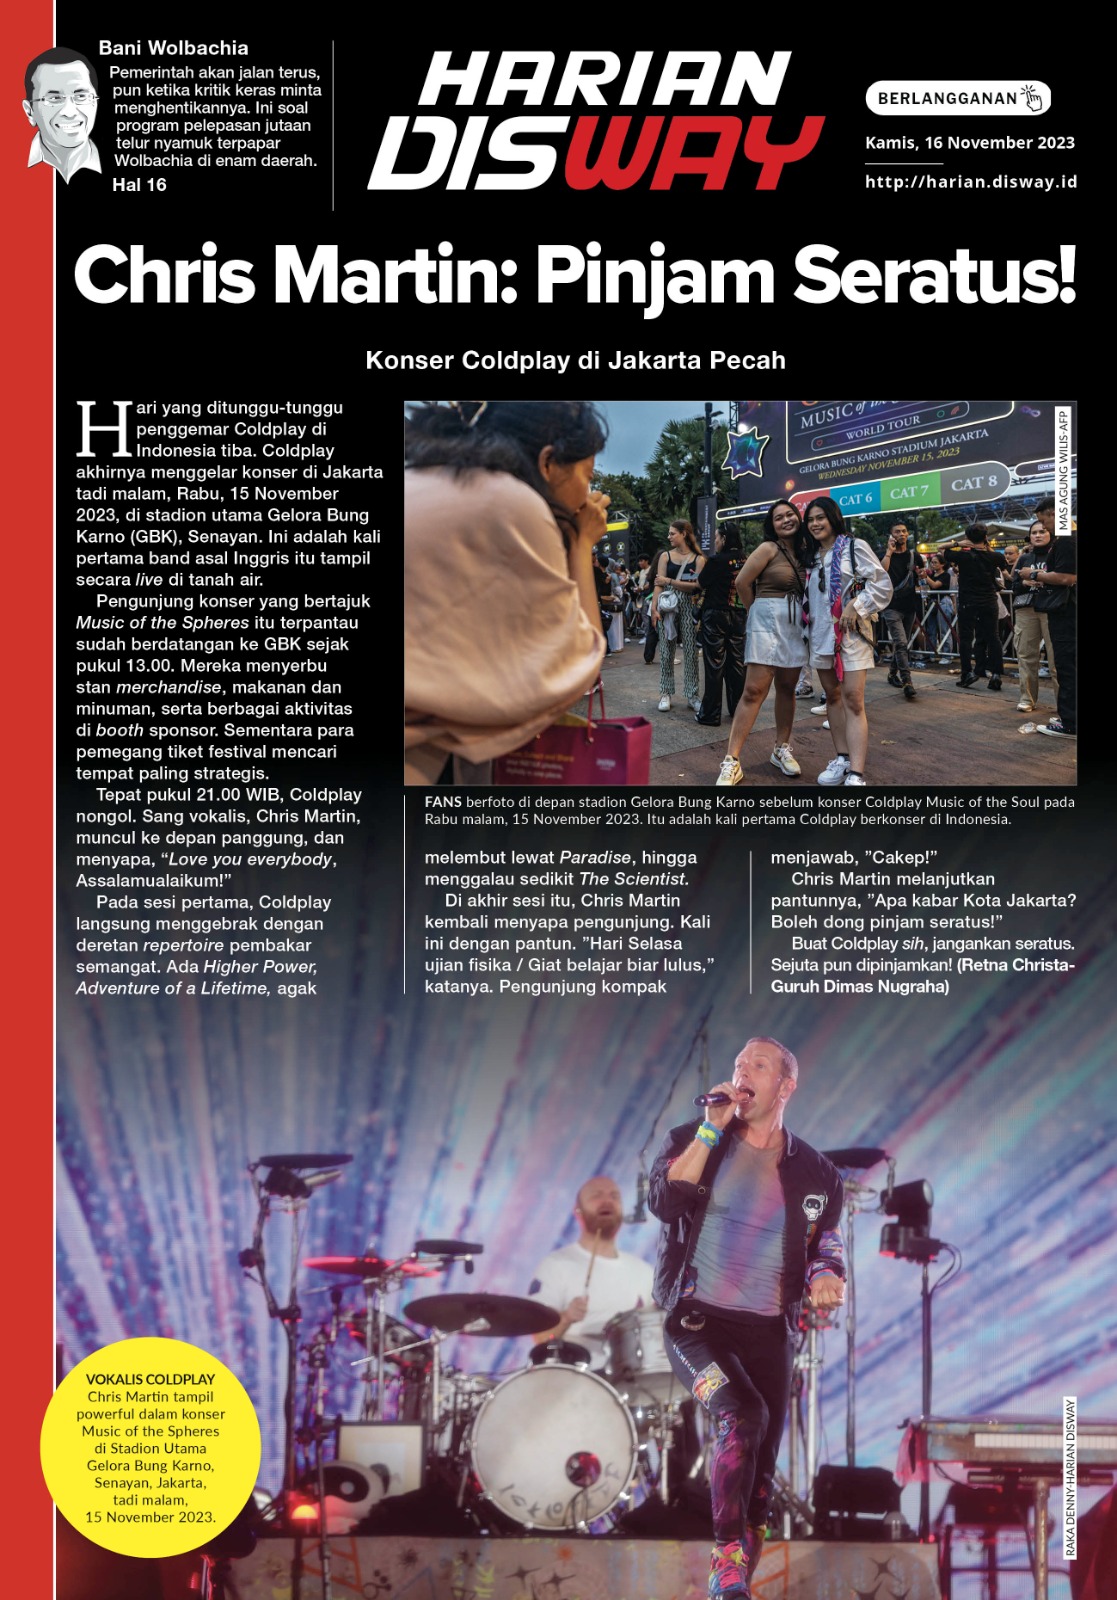 Chris Martin: Pinjam Seratus!